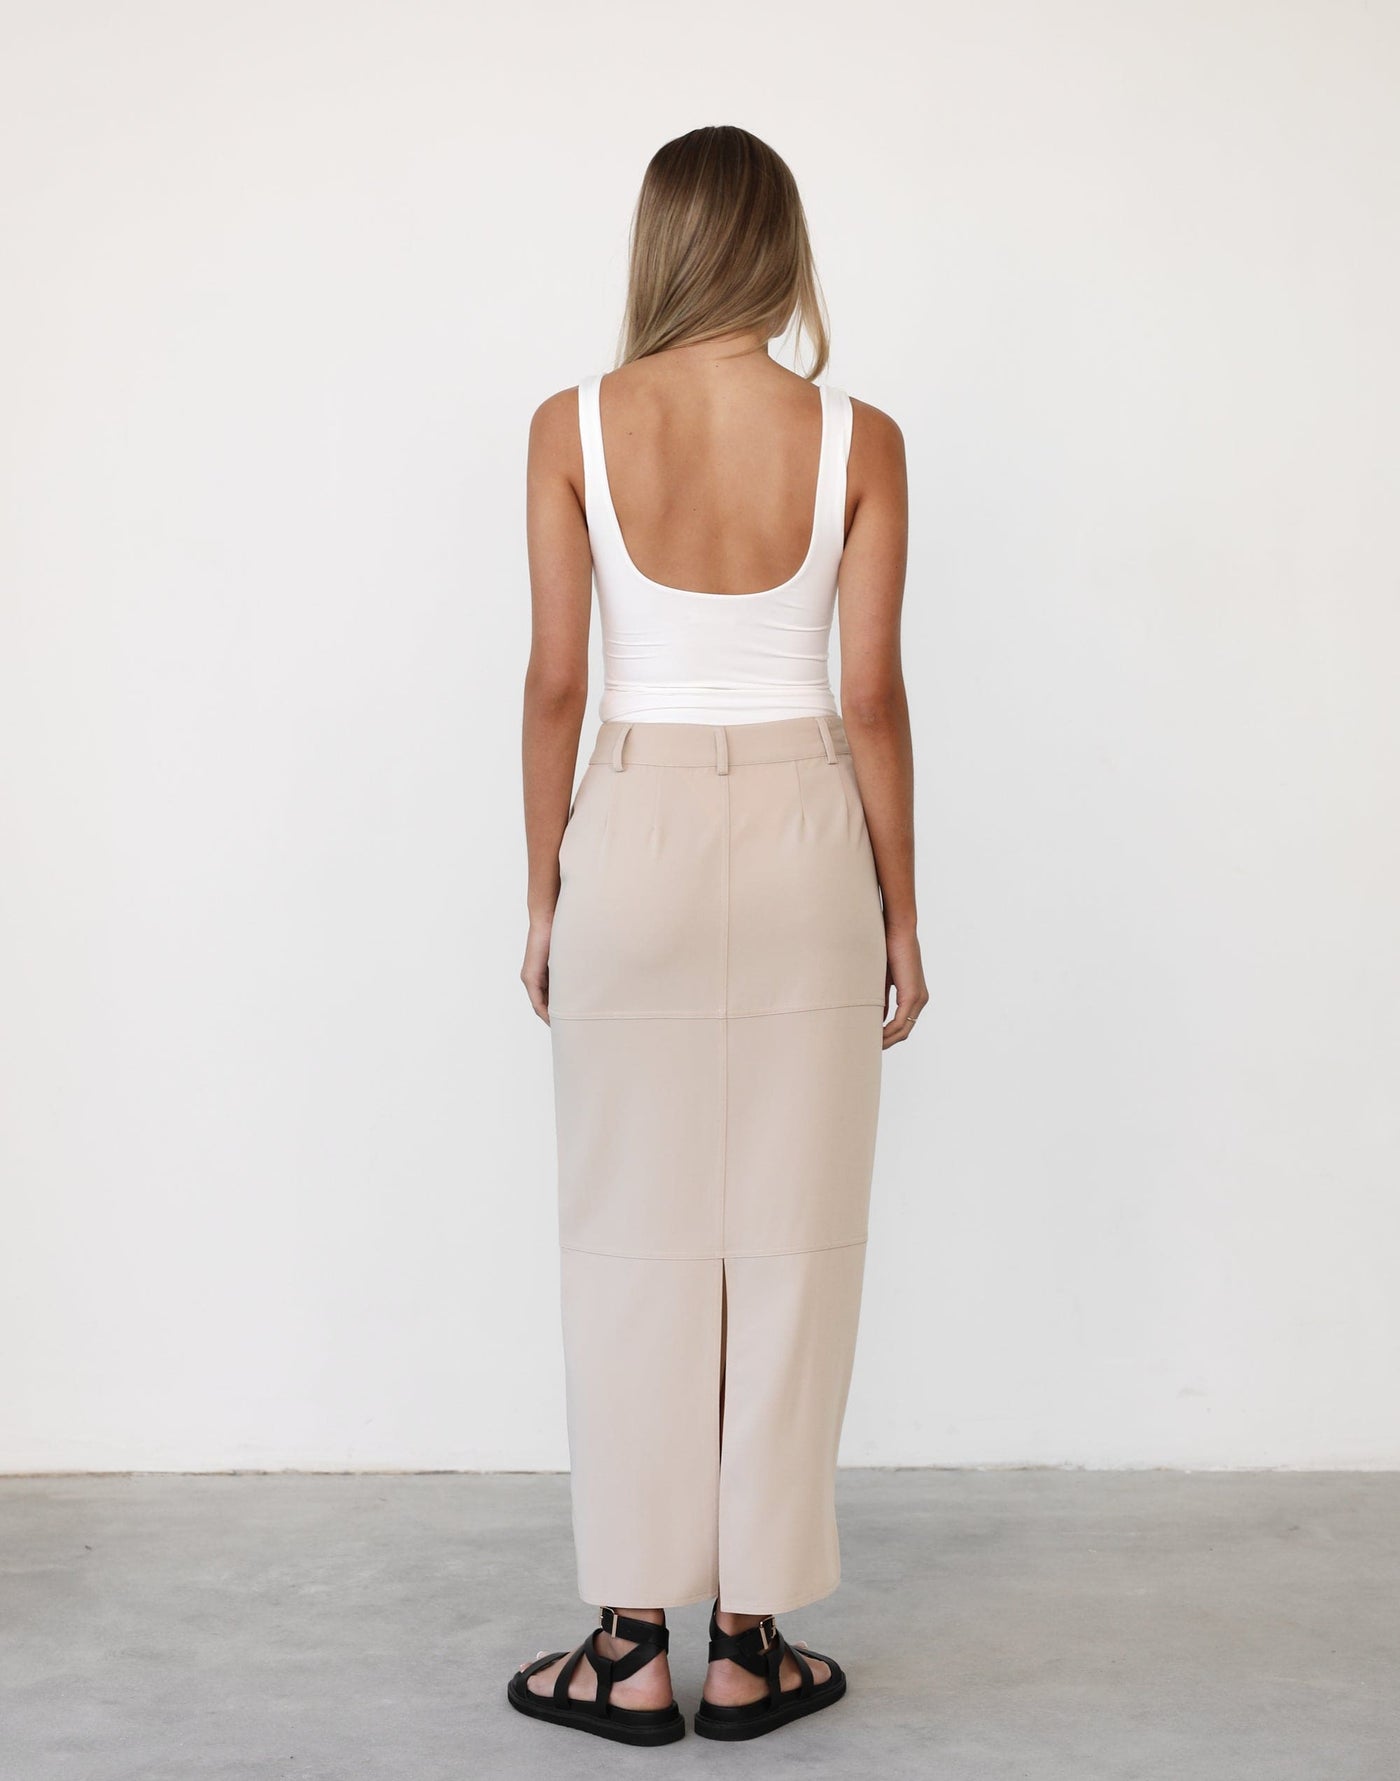 Levitate Bodysuit (White) - Low Back Scoop Neck Sleeveless Bodysuit - Women's Top - Charcoal Clothing